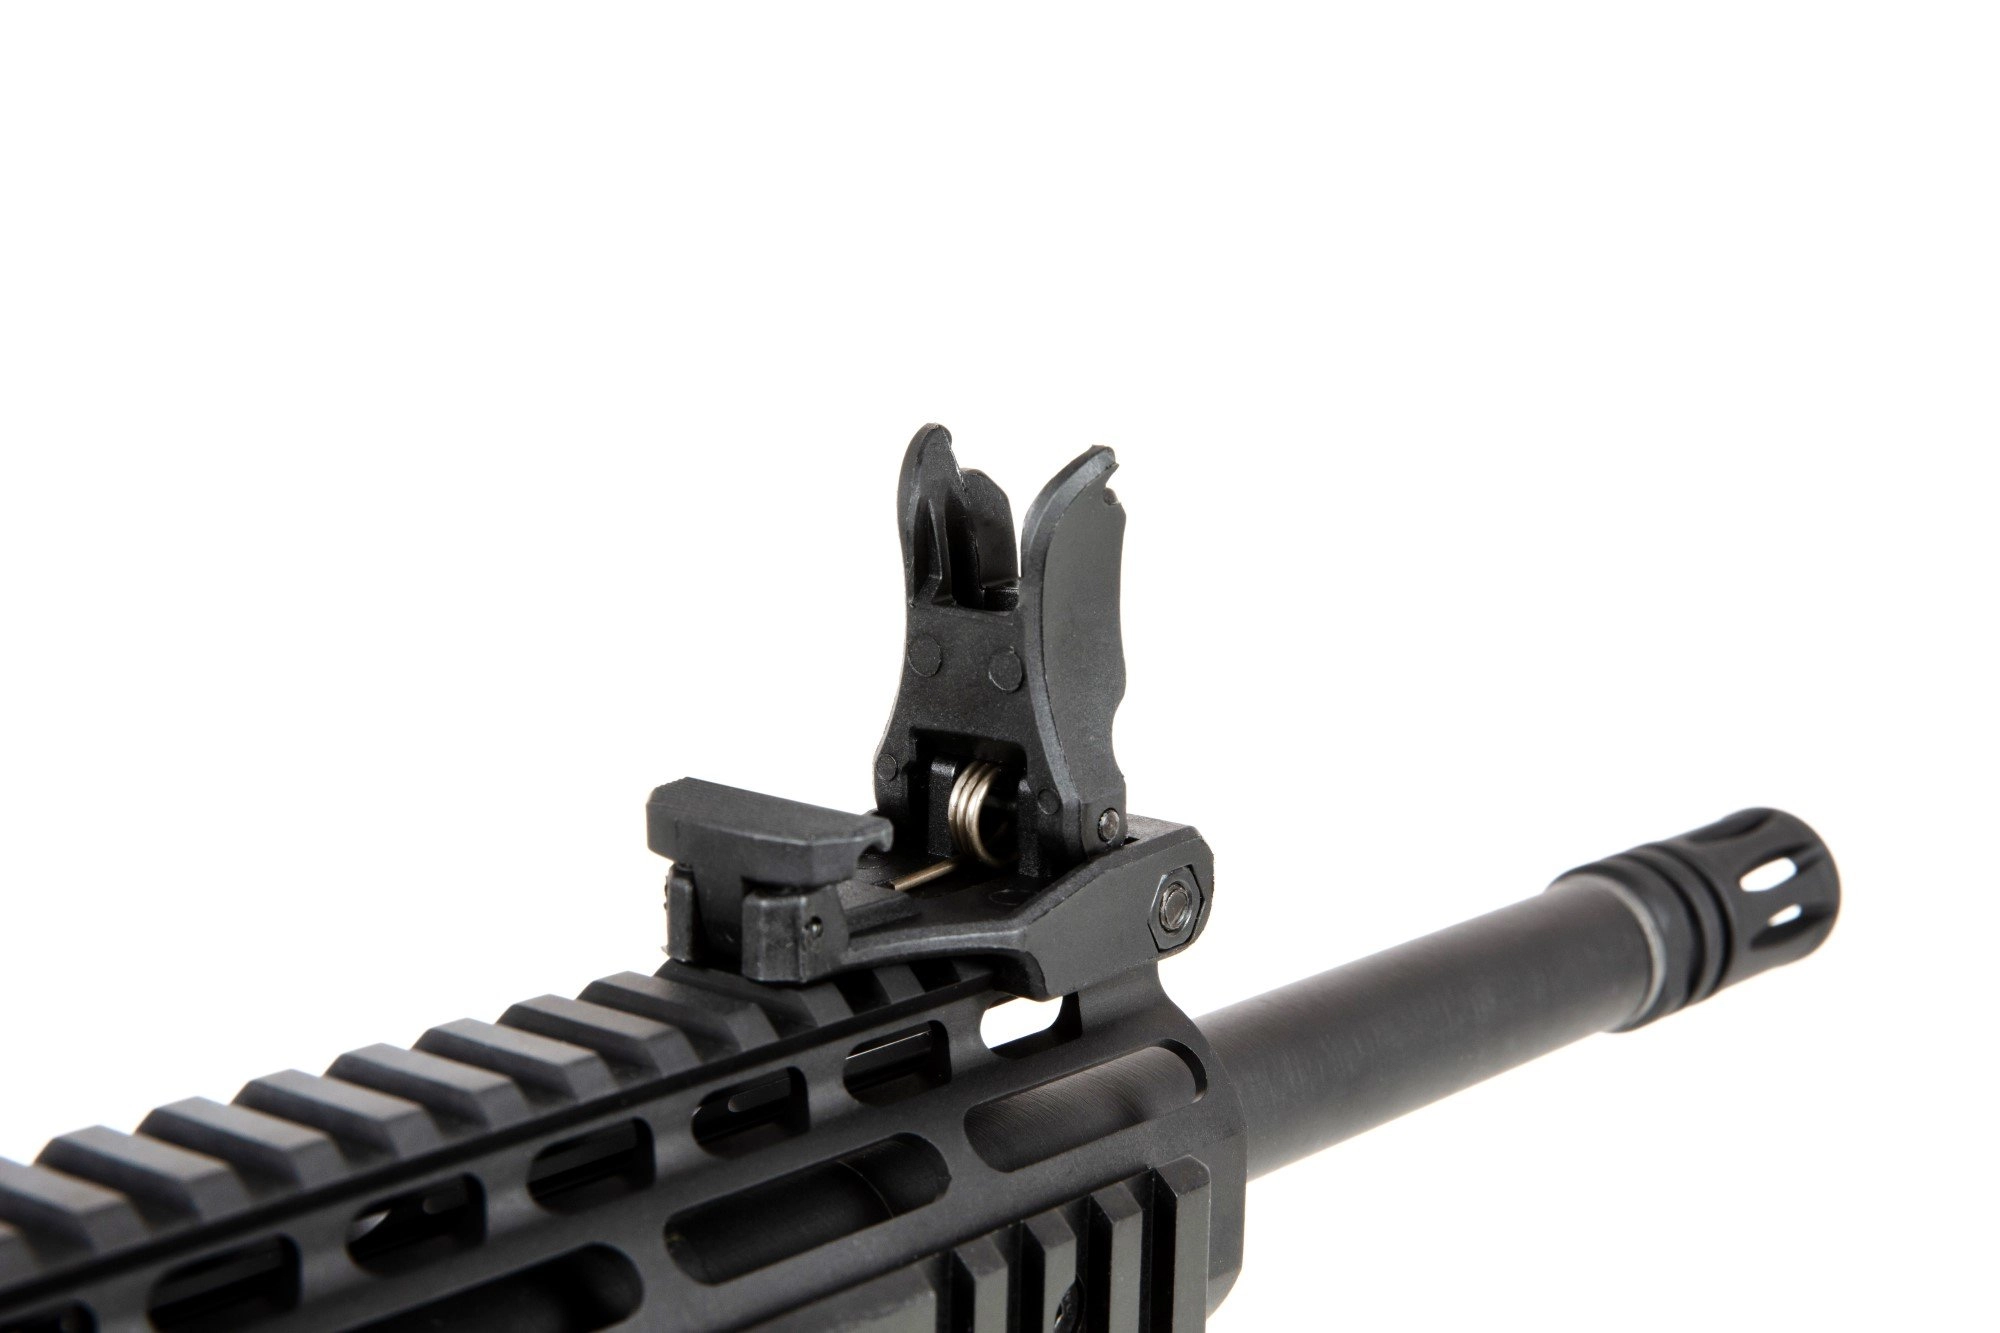 SPECNA ARMS AEG Rifle Edge SA-E09